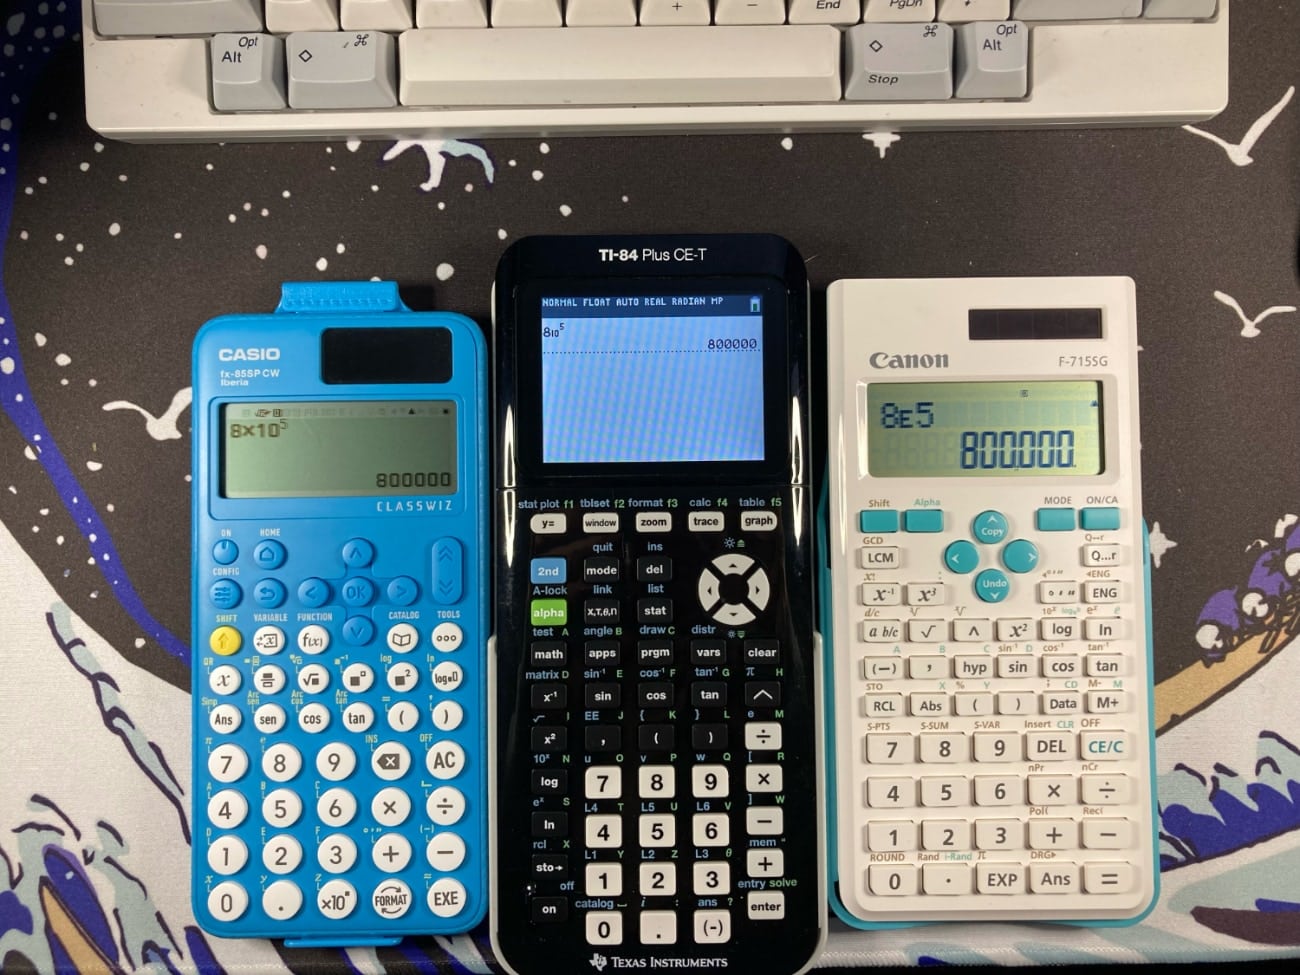 Calculamos con notación científica en calculadoras científicas de Casio, Canon y TI: 8E5, lo que significa 8 x 10E5 y obtenemos 800.000.